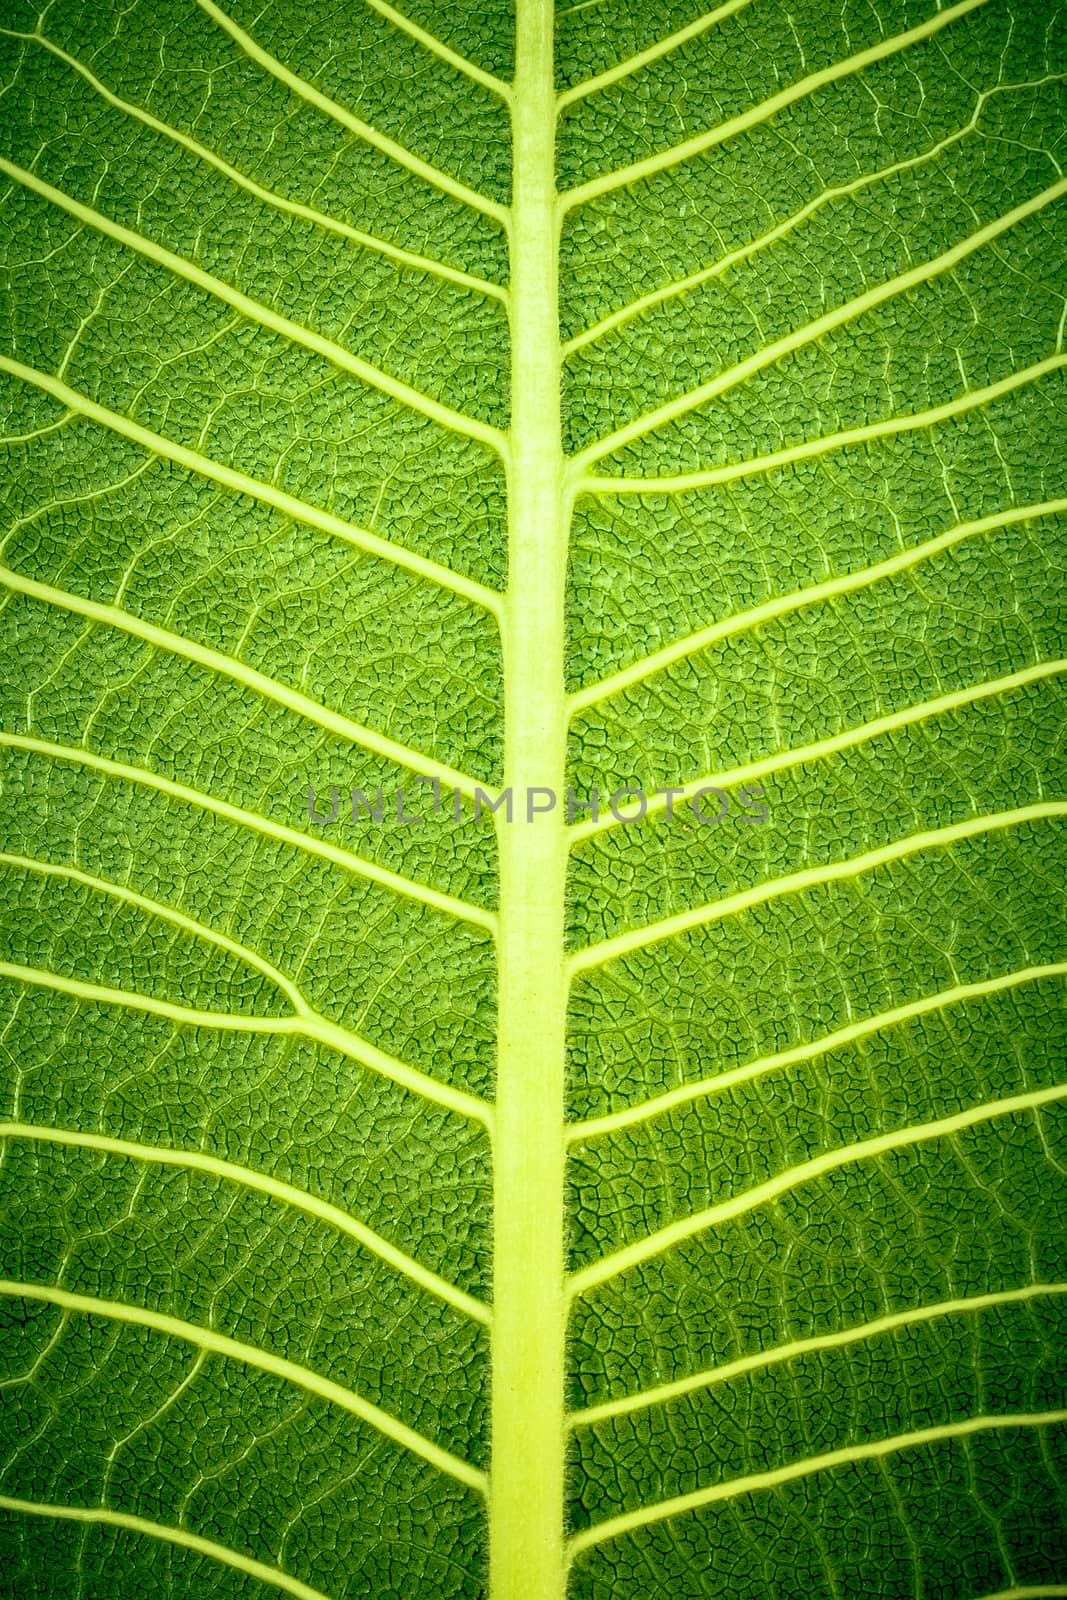 texture of leaf